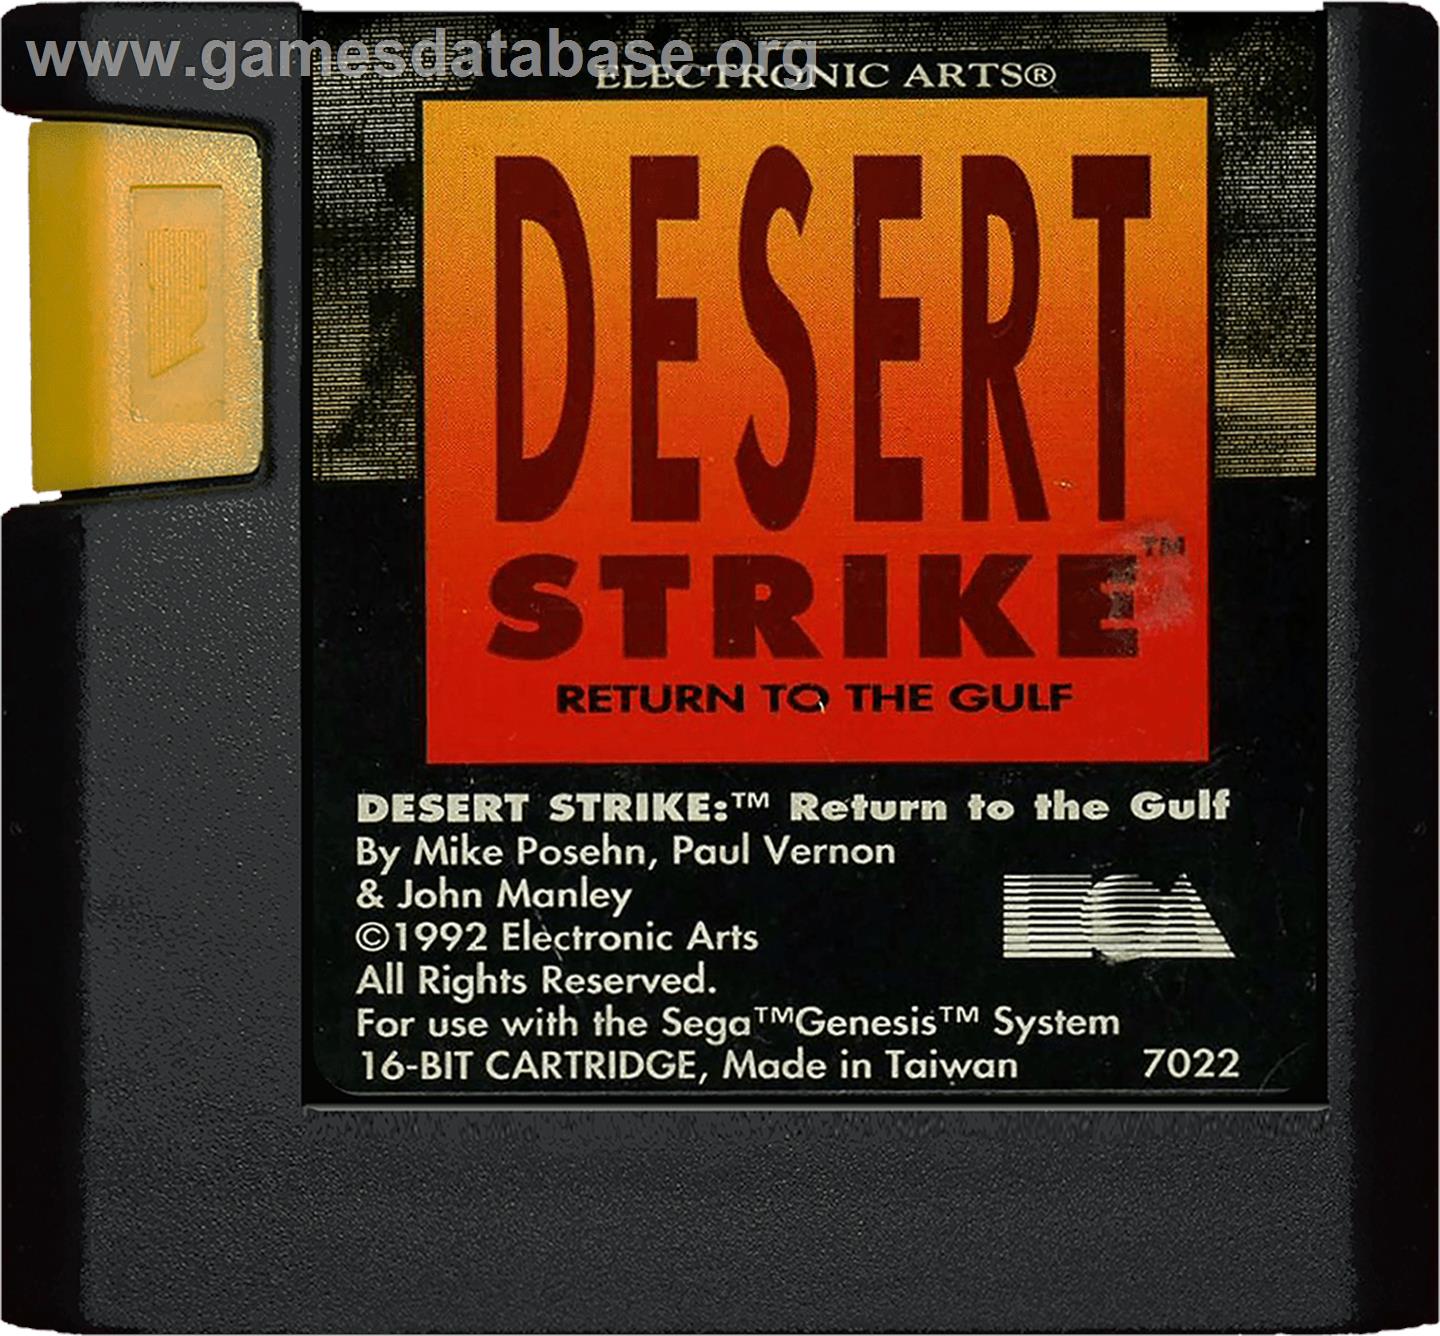 Desert Strike: Return to the Gulf - Sega Genesis - Artwork - Cartridge